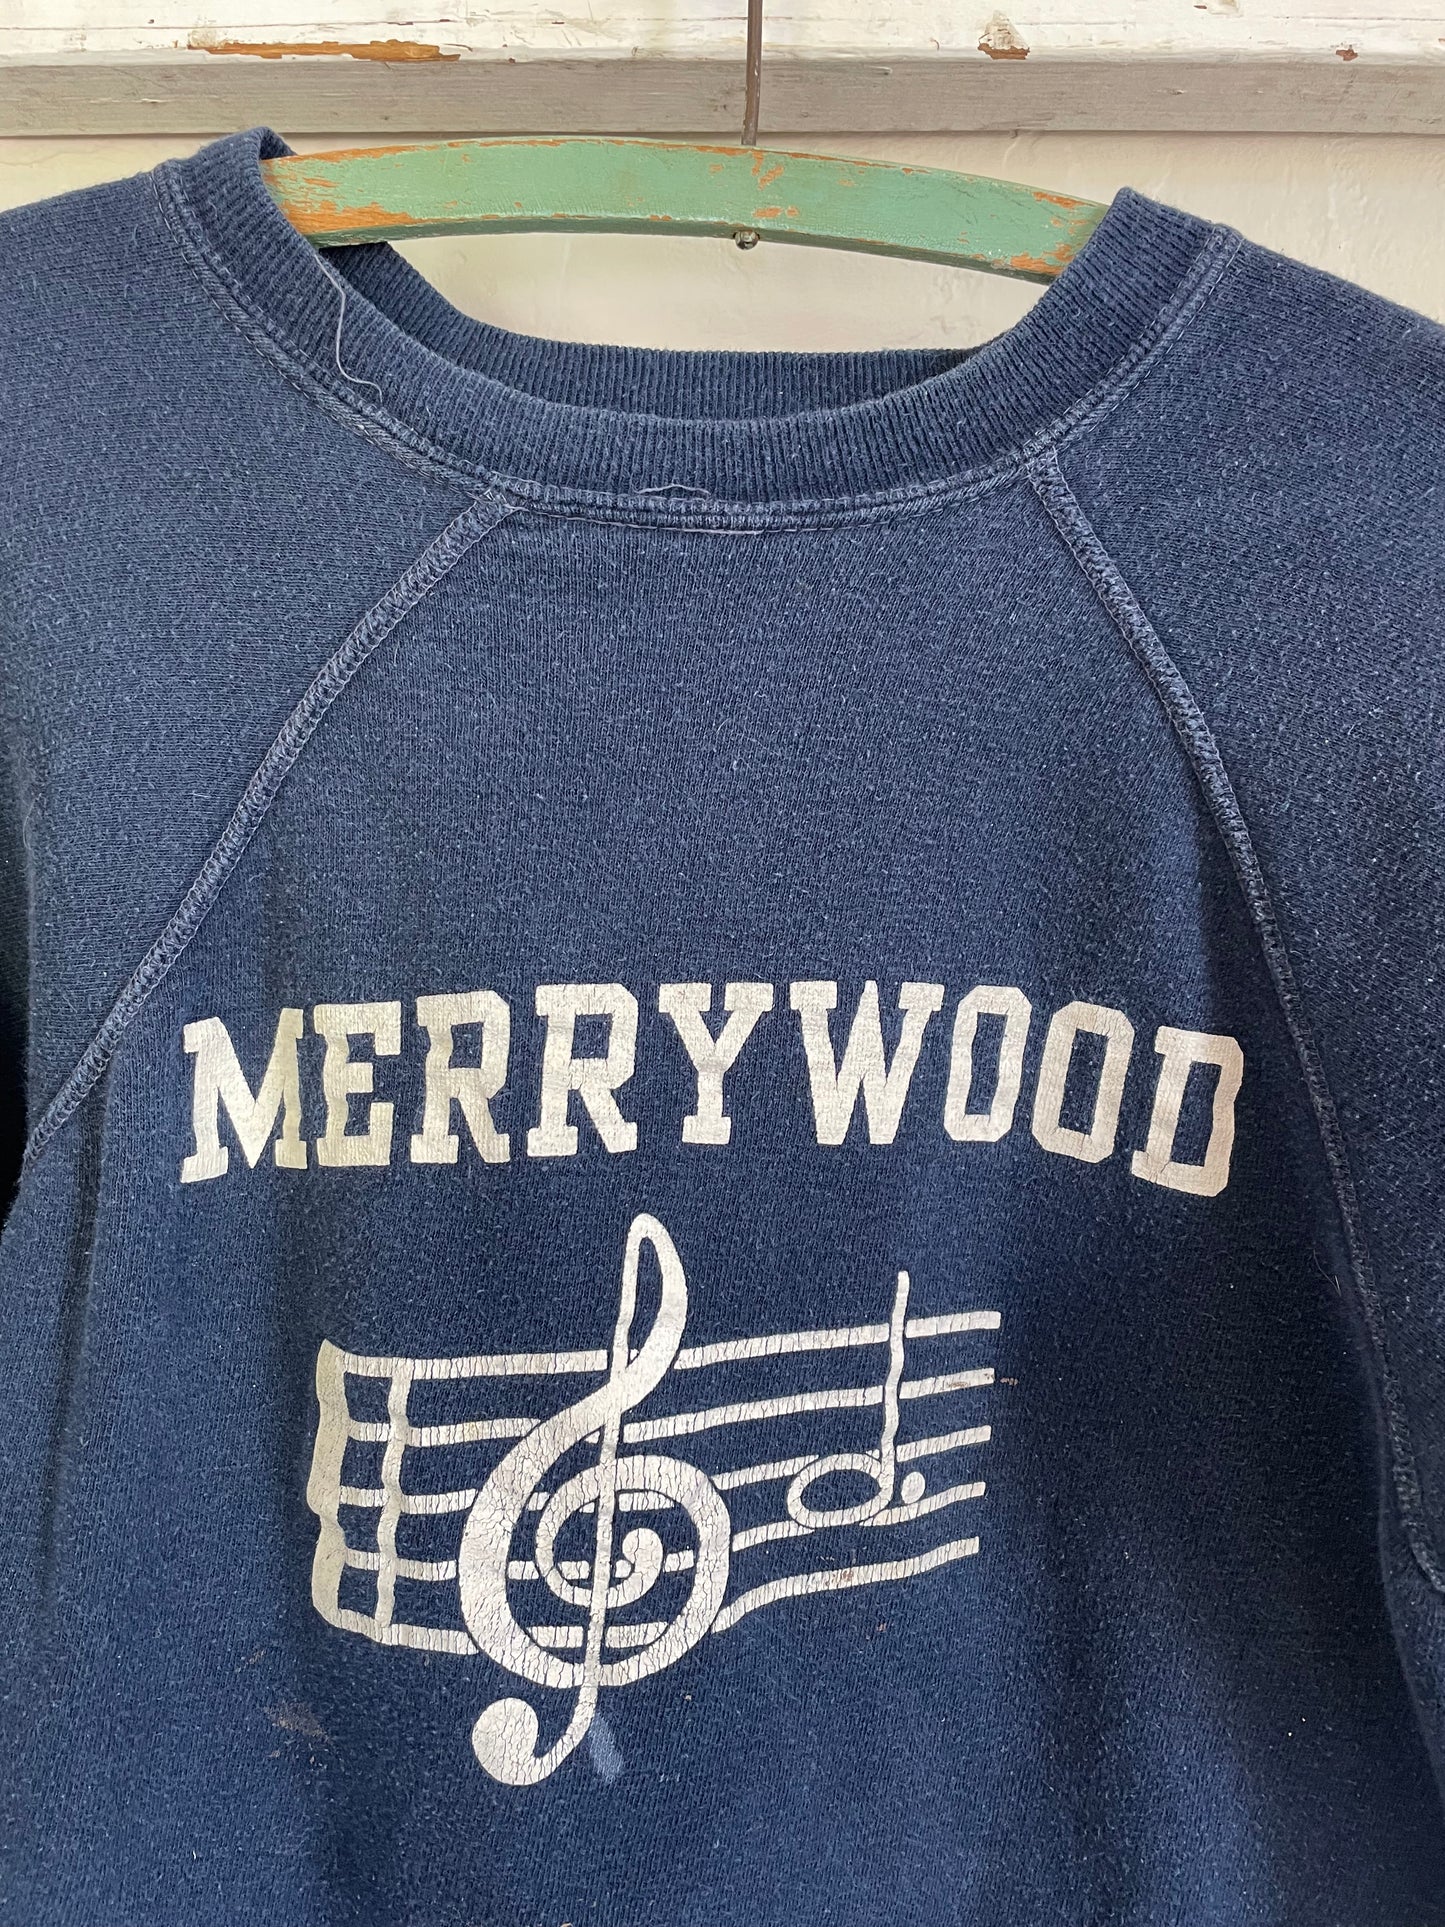 70s Merrywood Sweatshirt